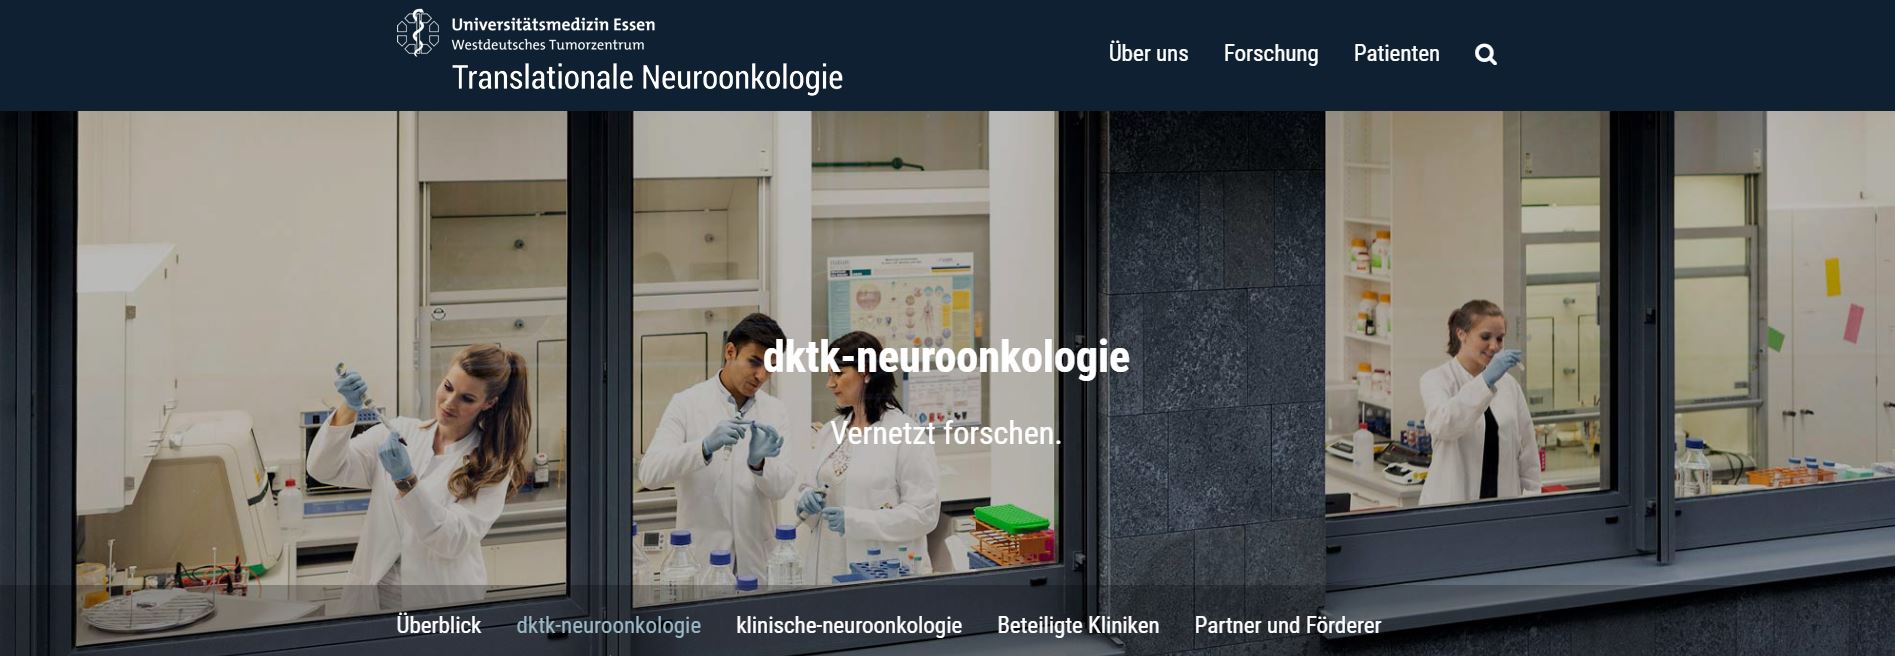 Translationale Neuroonkologie,Universitätsmedizin-Essen